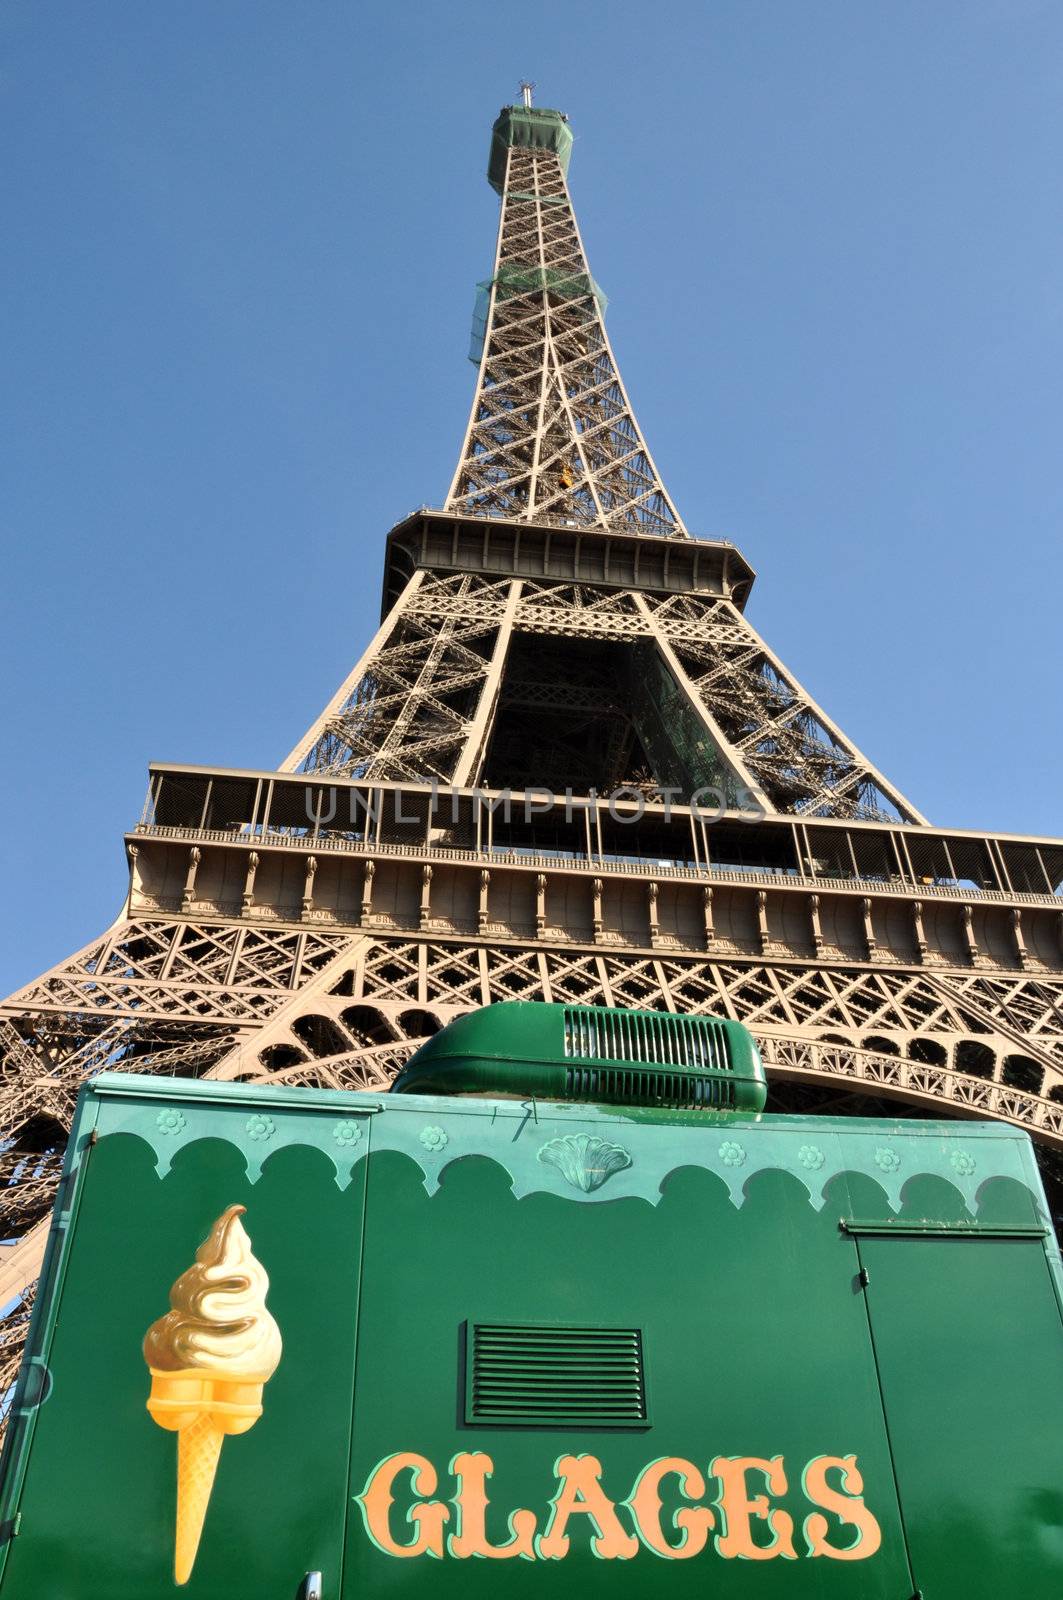 The Eiffel Tower by dutourdumonde